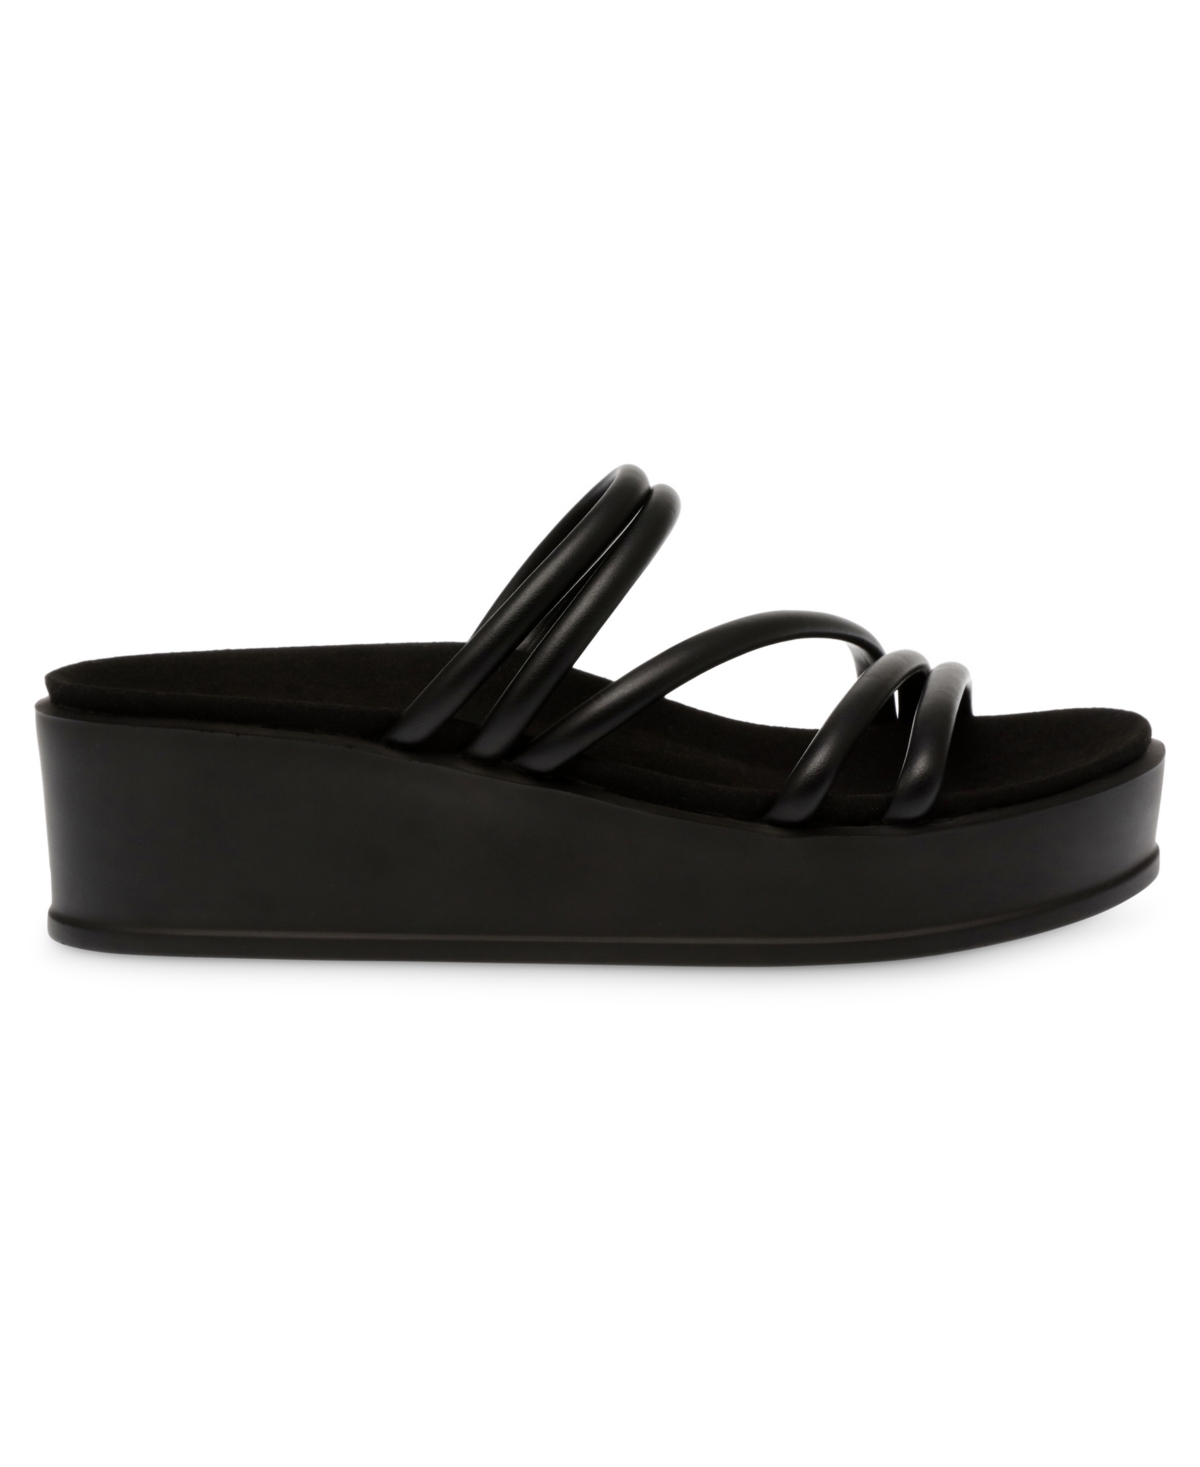 Women's Vaga Wedge Sandals - Black Smooth